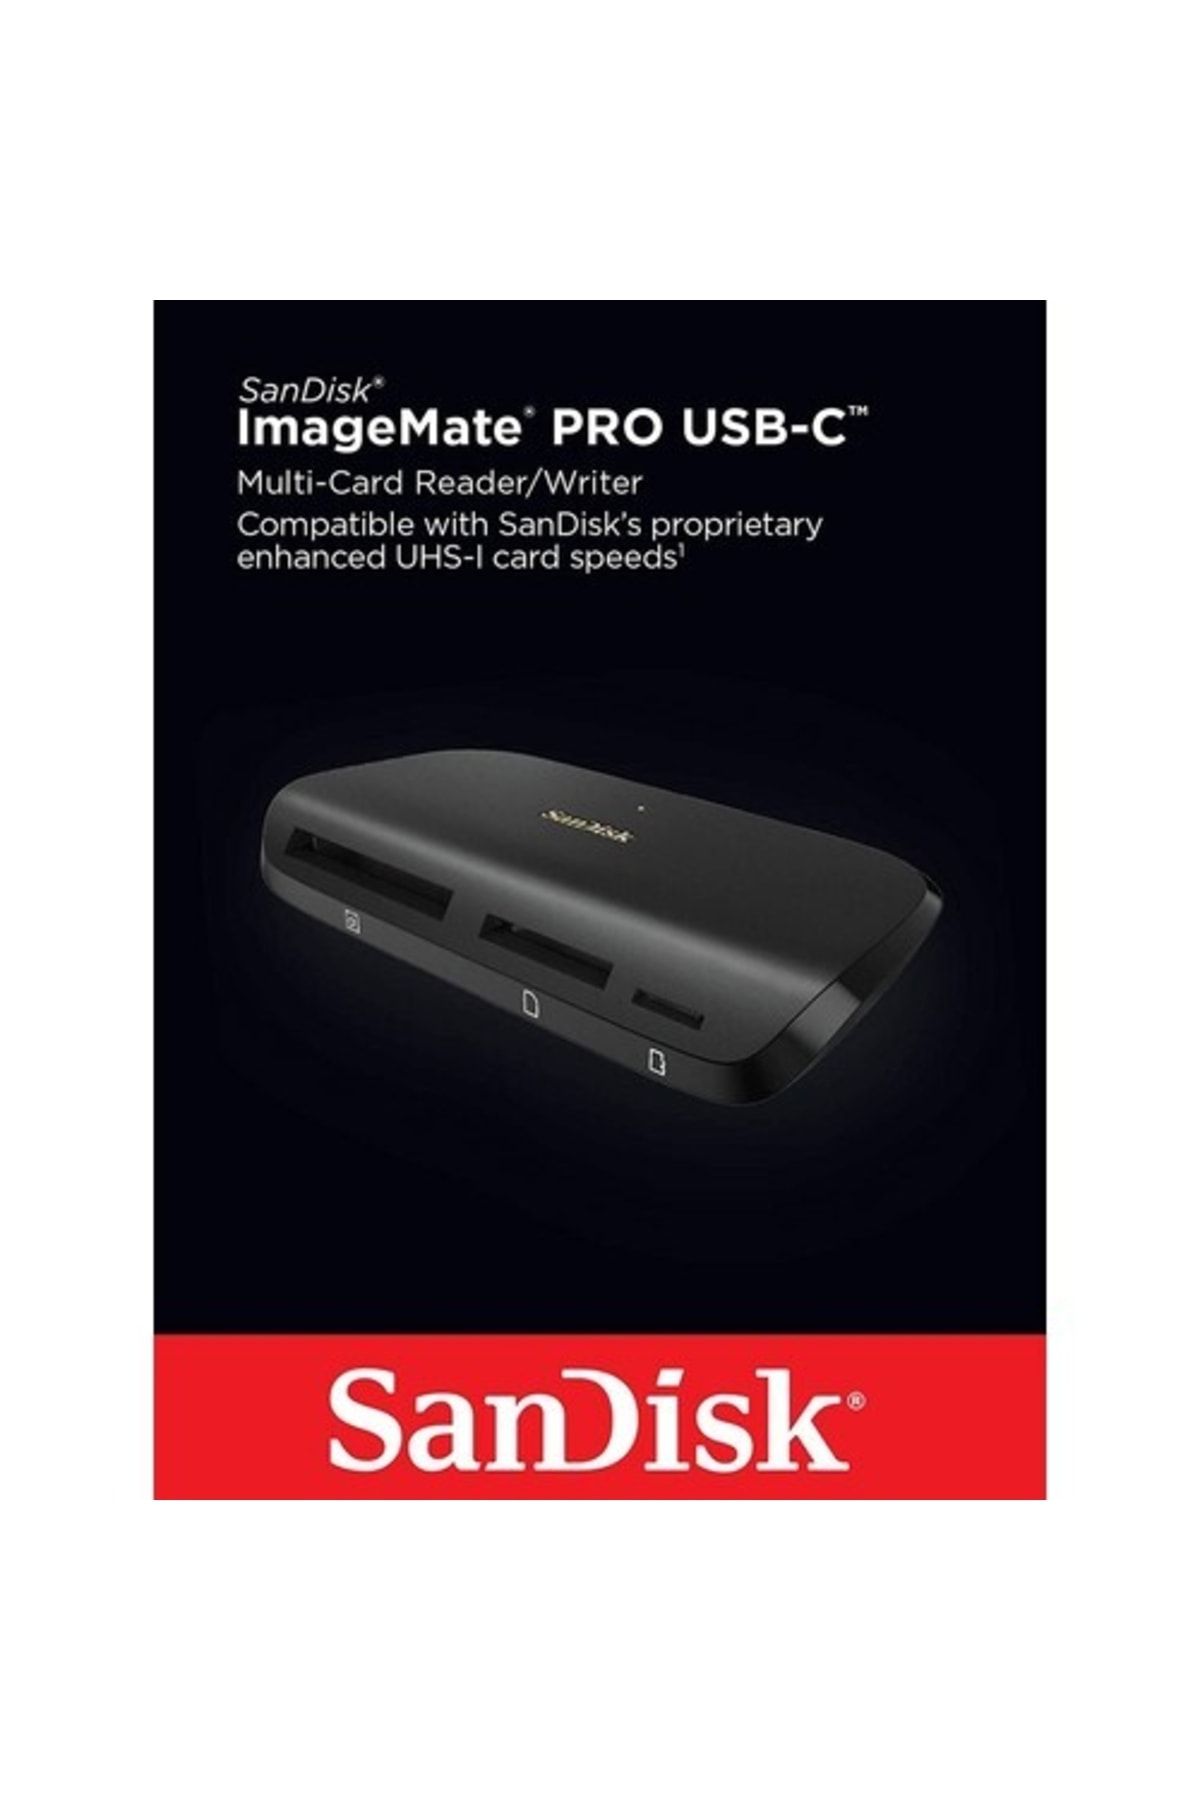 Sandisk Imagemate Pro Usb-c